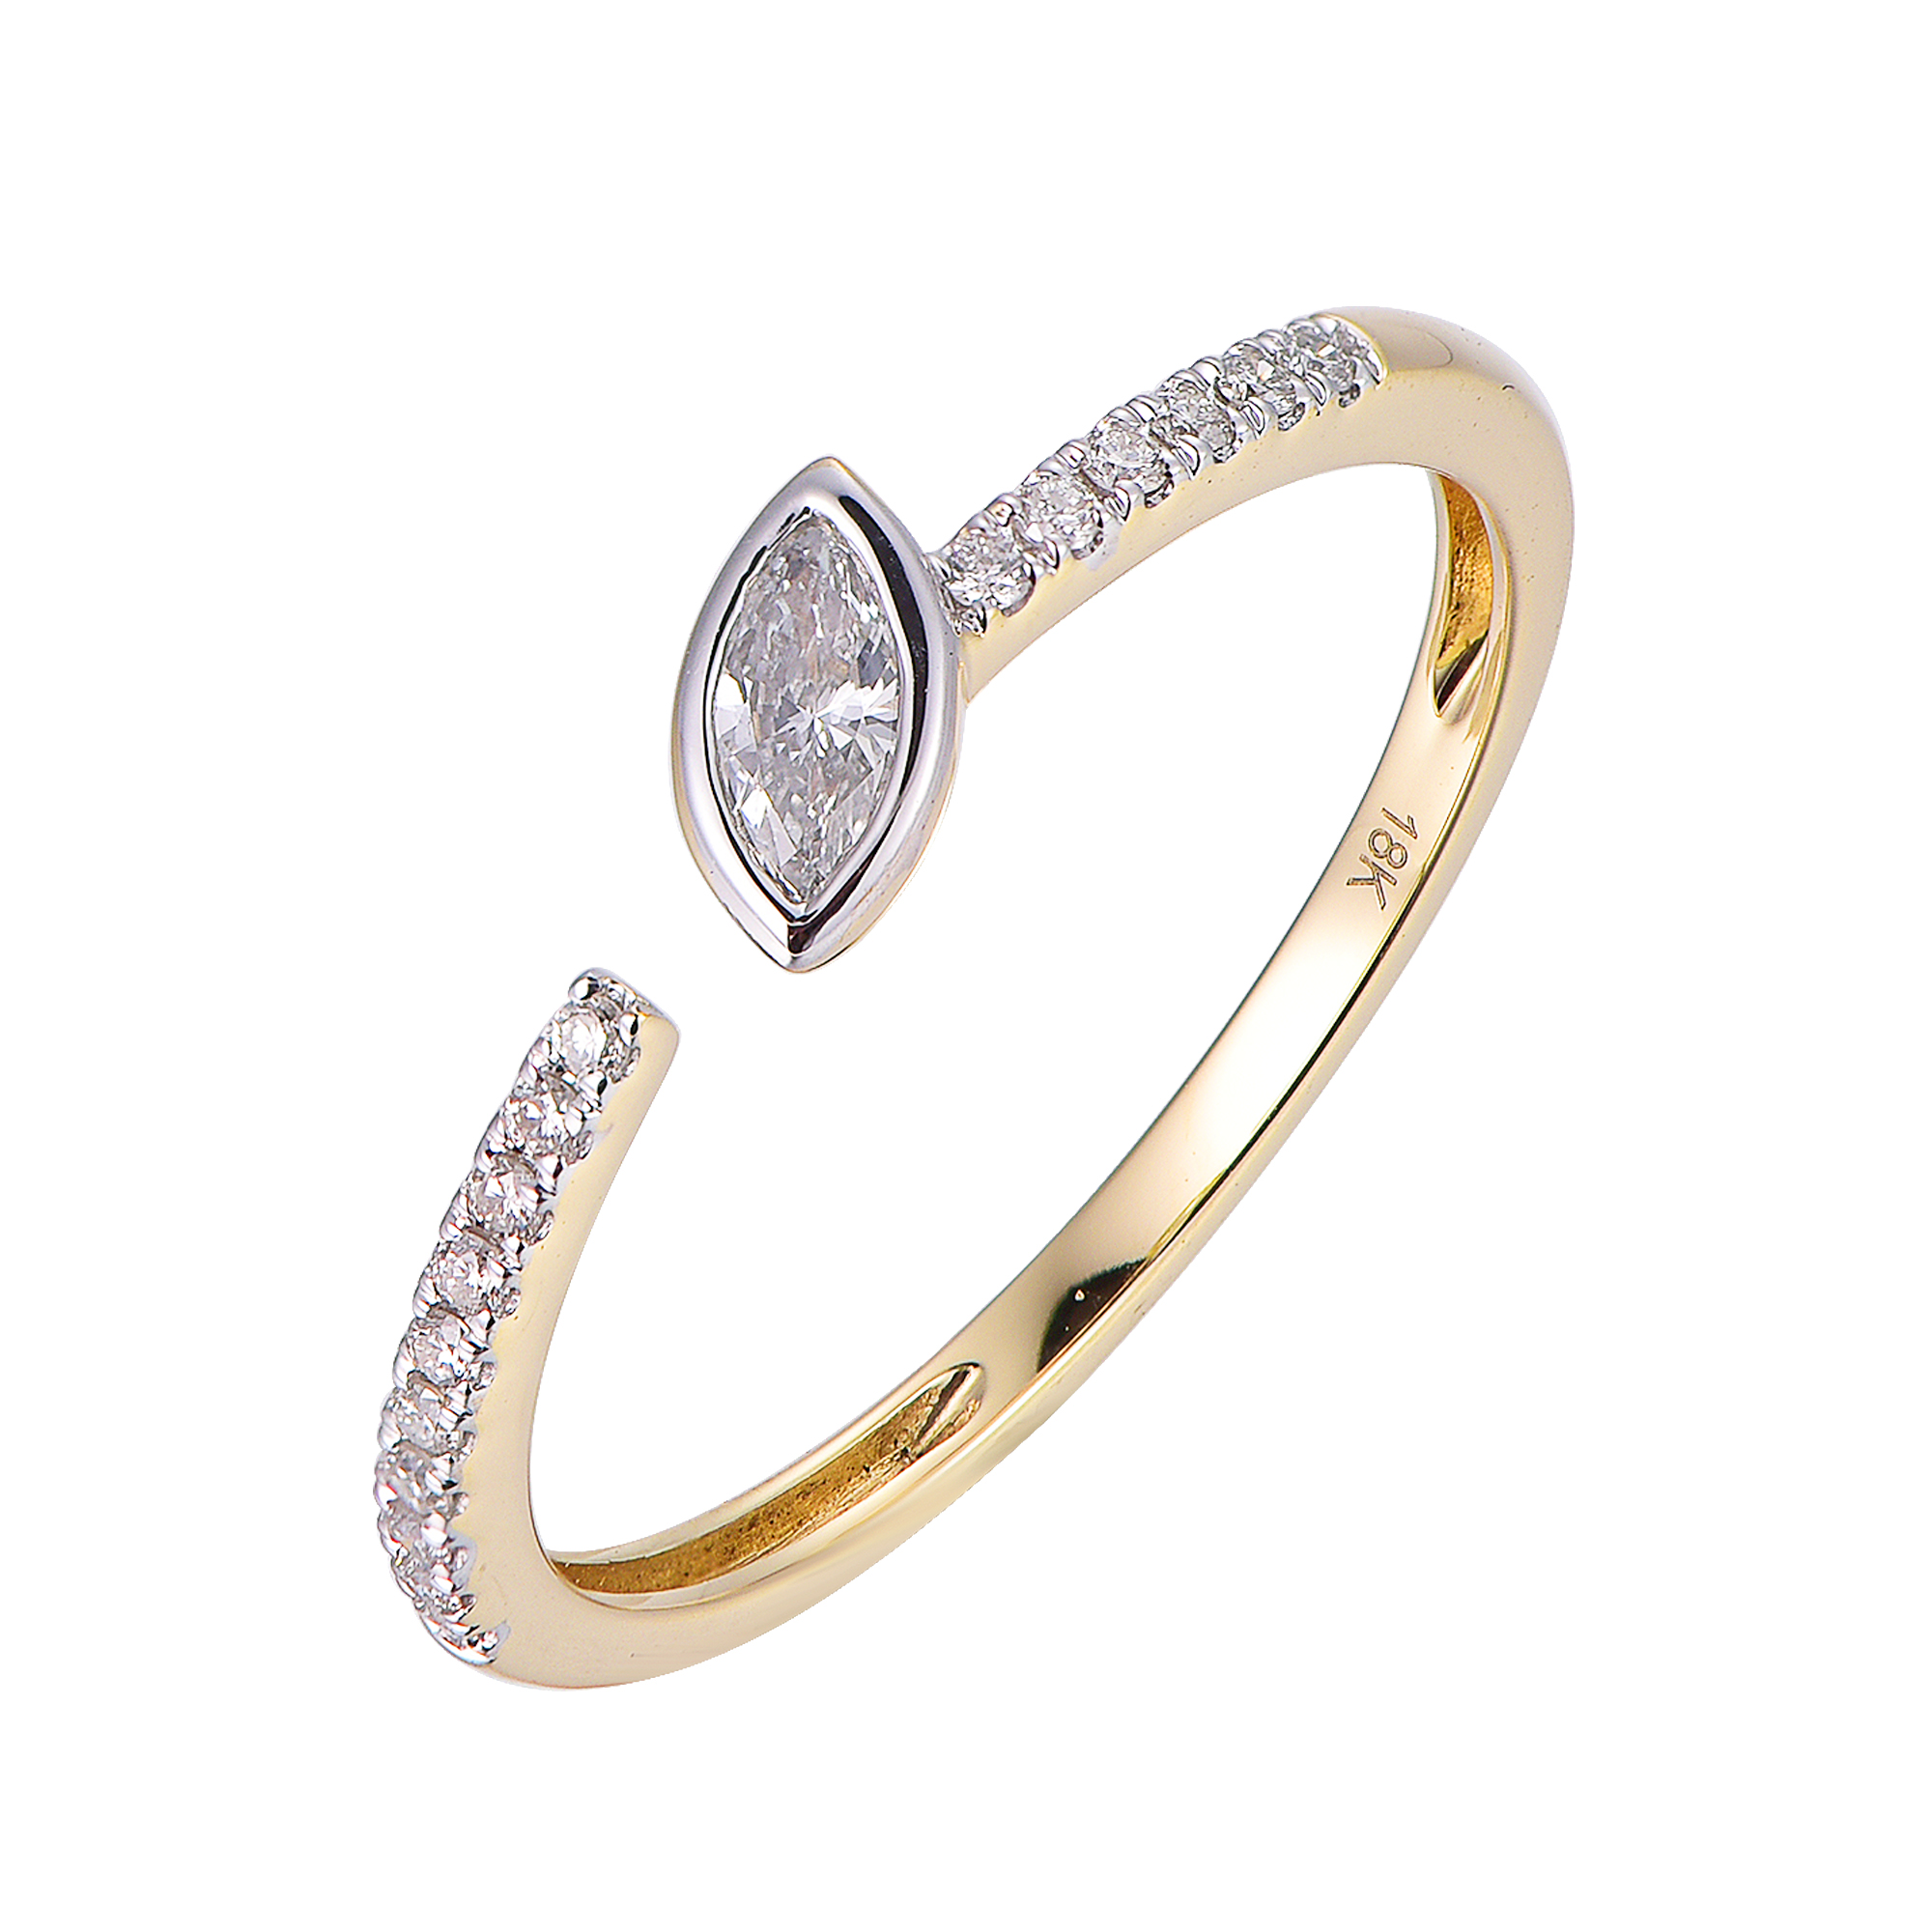 DI44627R 18K yellow gold marquise diamond ring